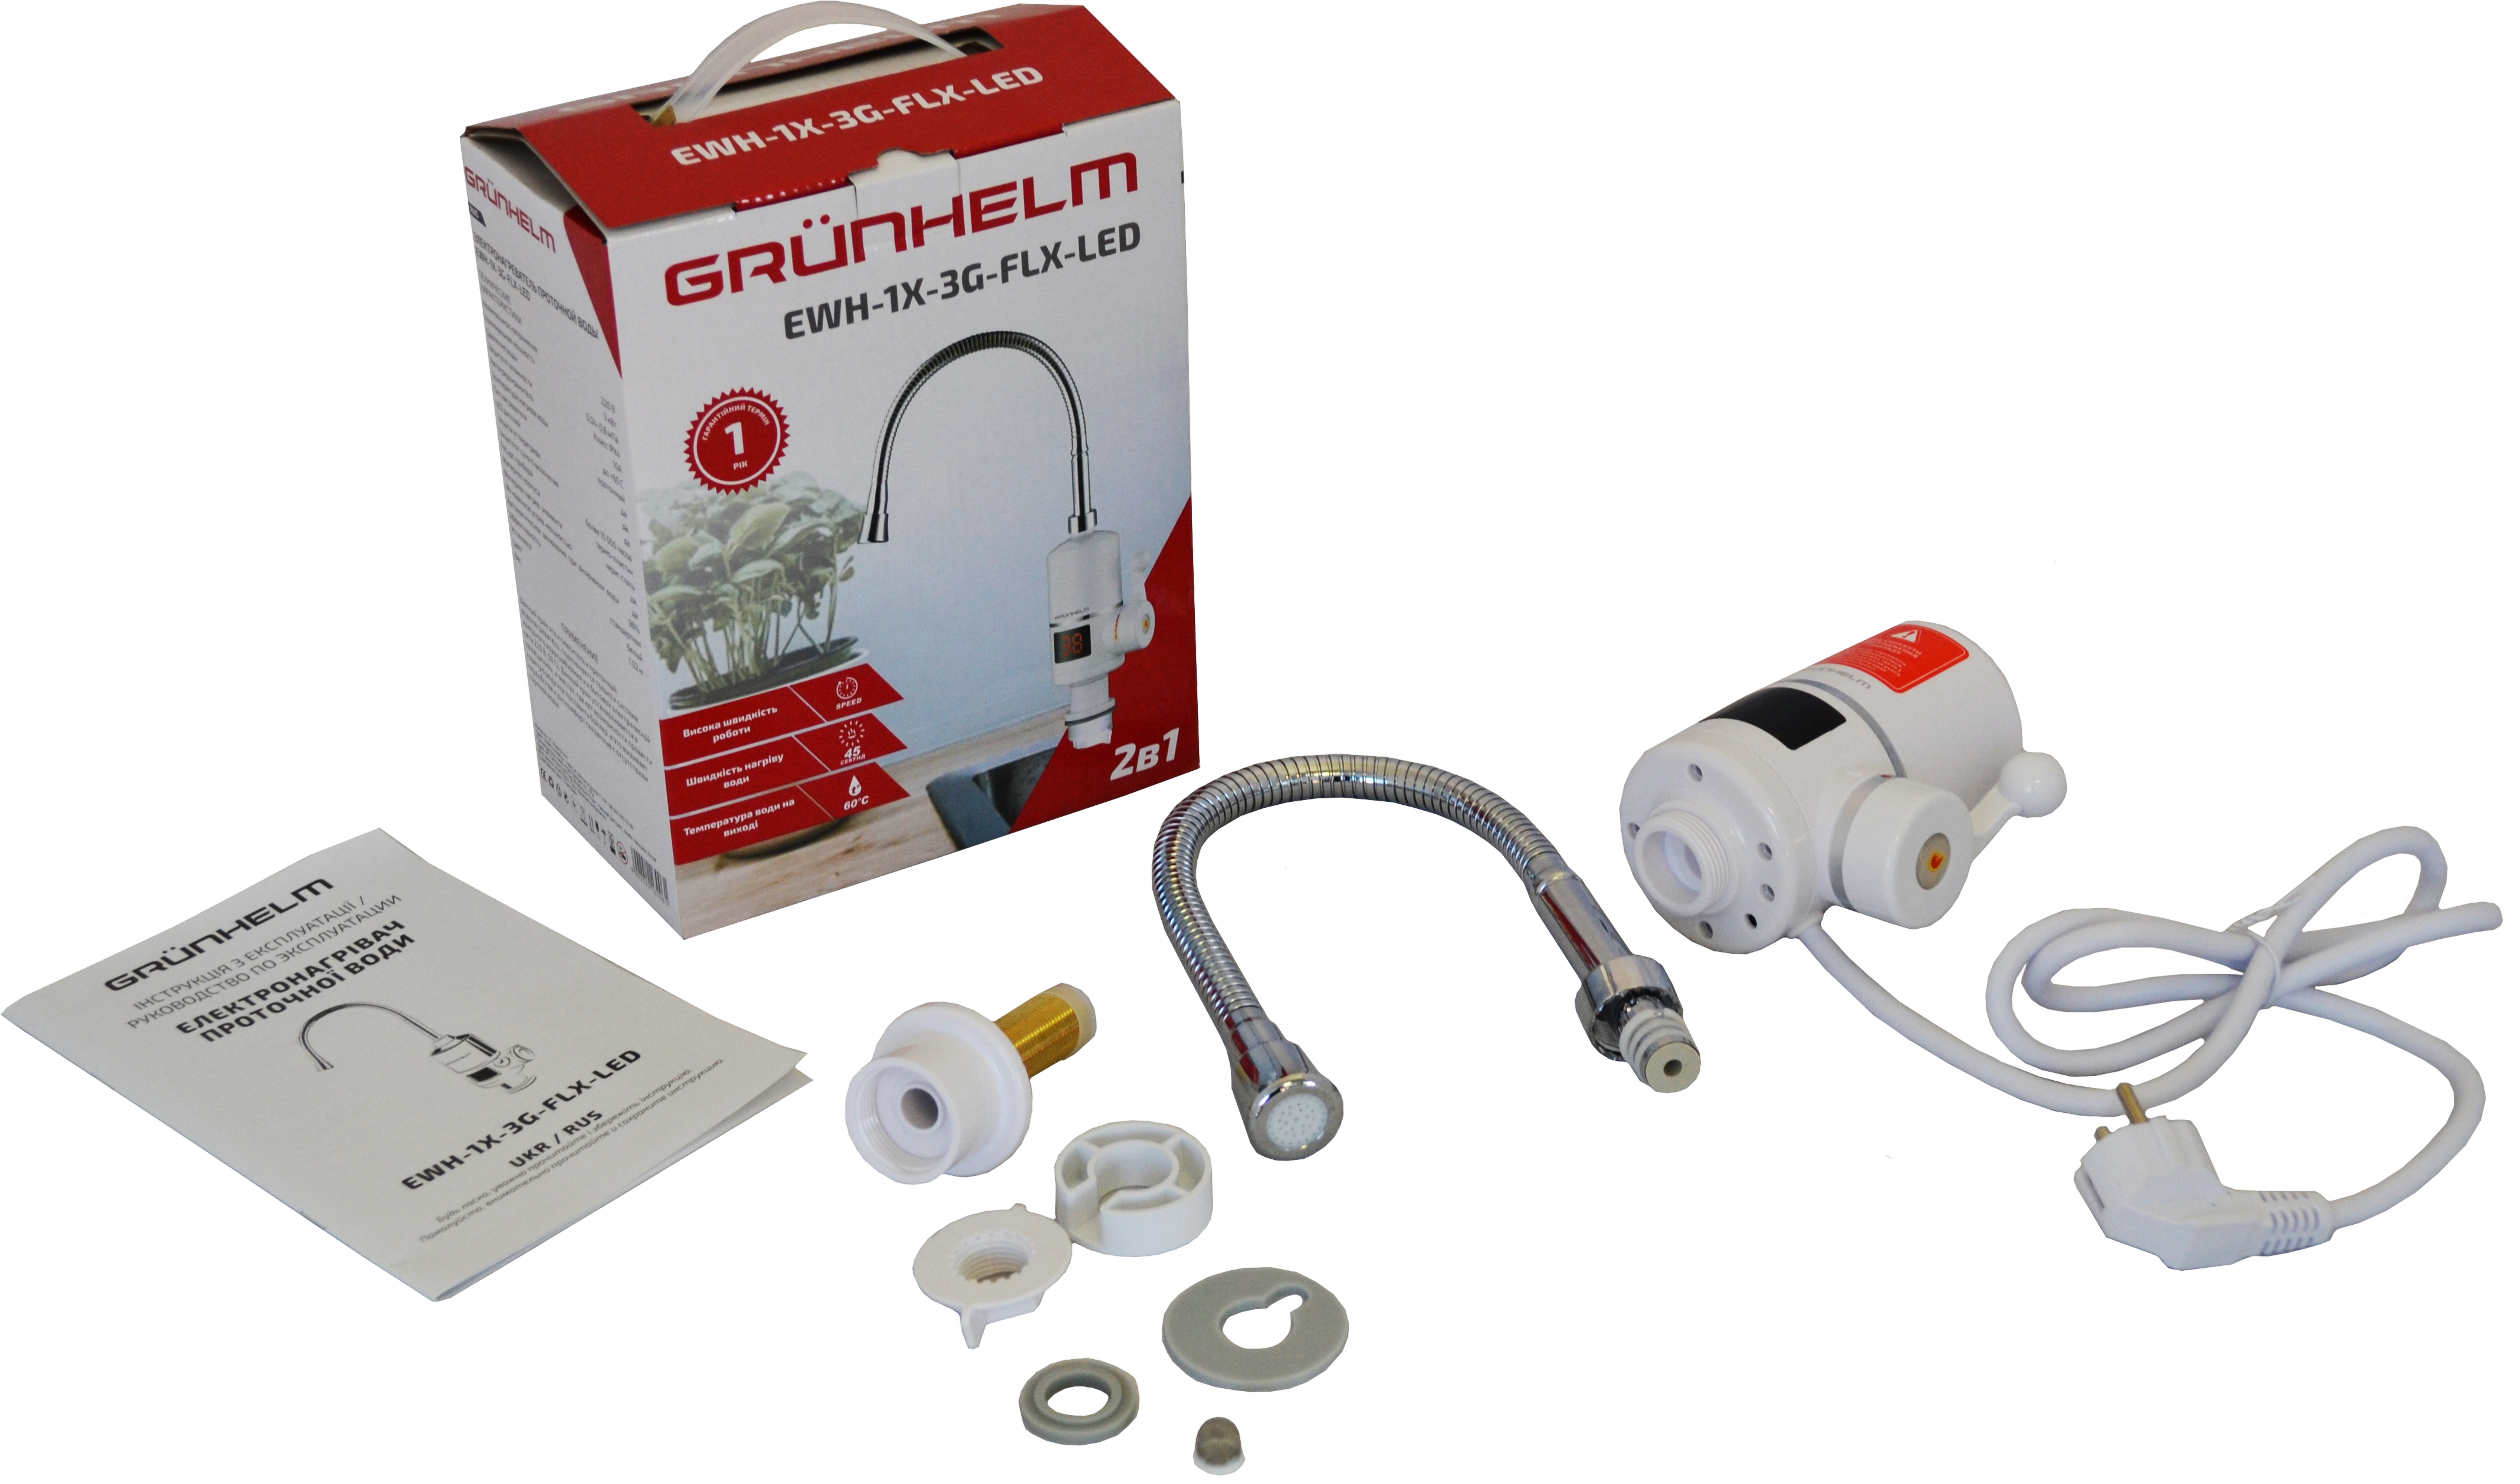 продаём Grunhelm EWH-1X-3G-FLX-LED в Украине - фото 4